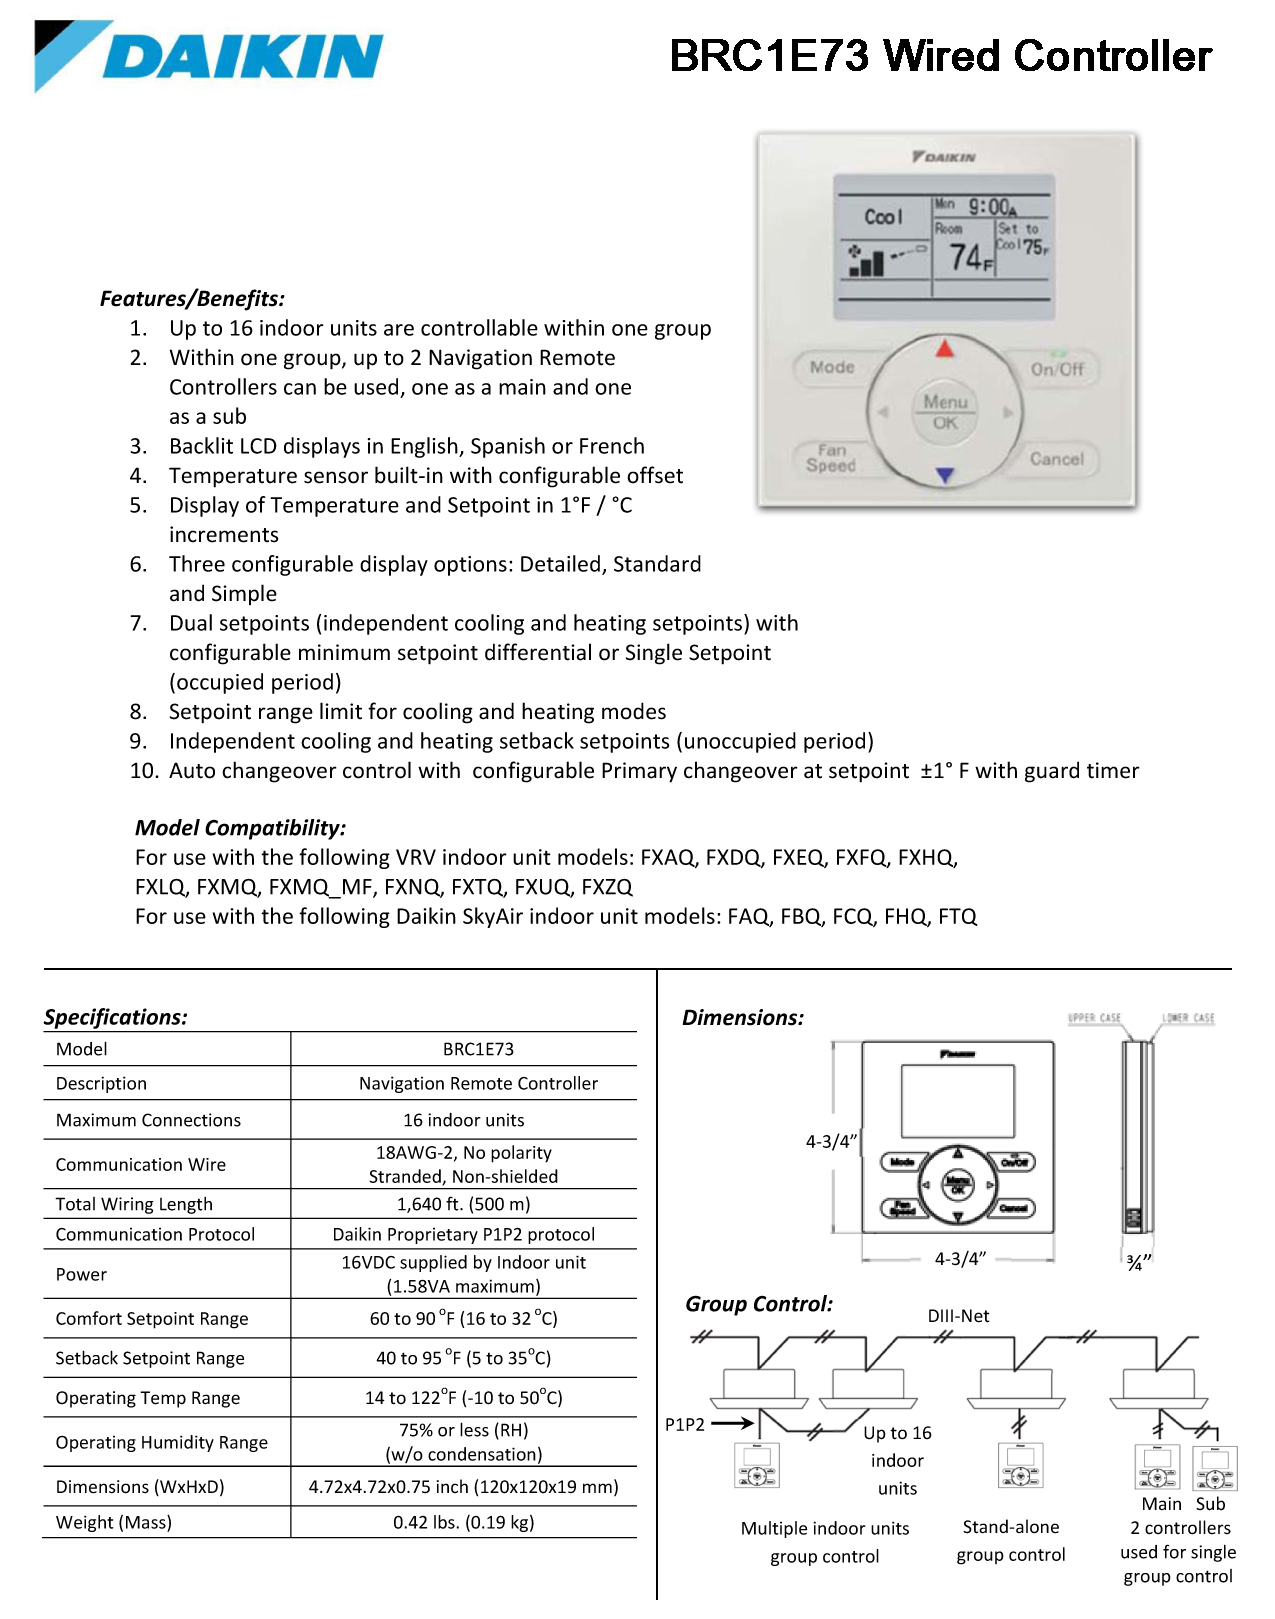 daikin wired remote controller installation manual